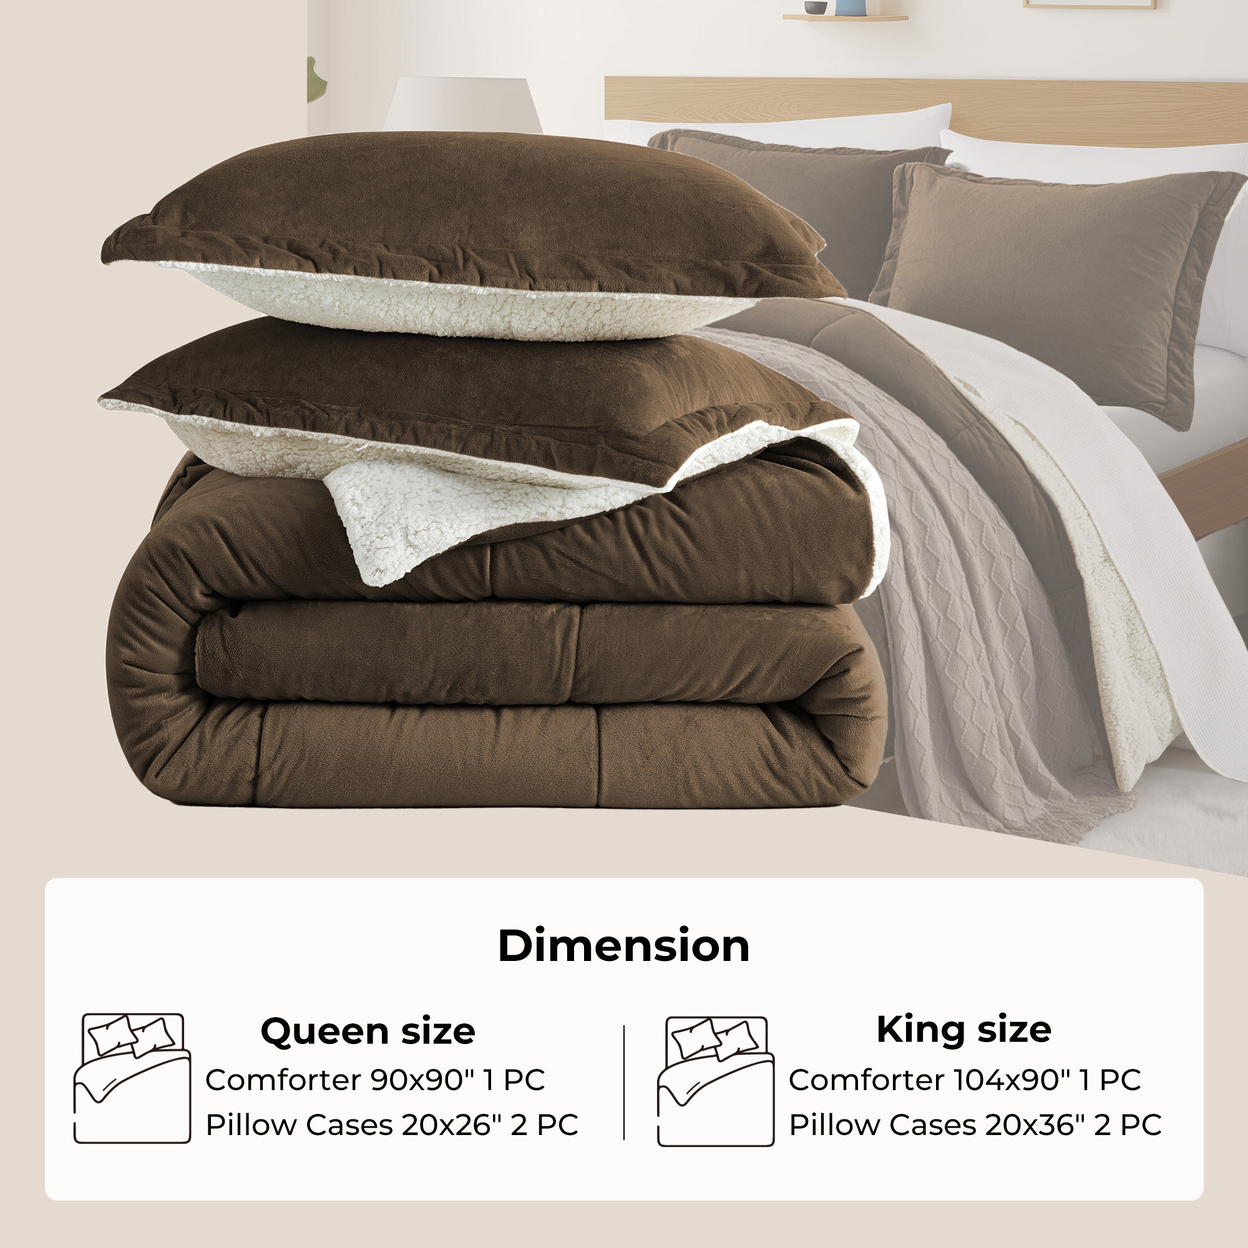 3 Piece All Season Comforter Set With Shams Reversible Faux Shearling-Down Alternative Comforter Set - Dark Brown, King Size-10490